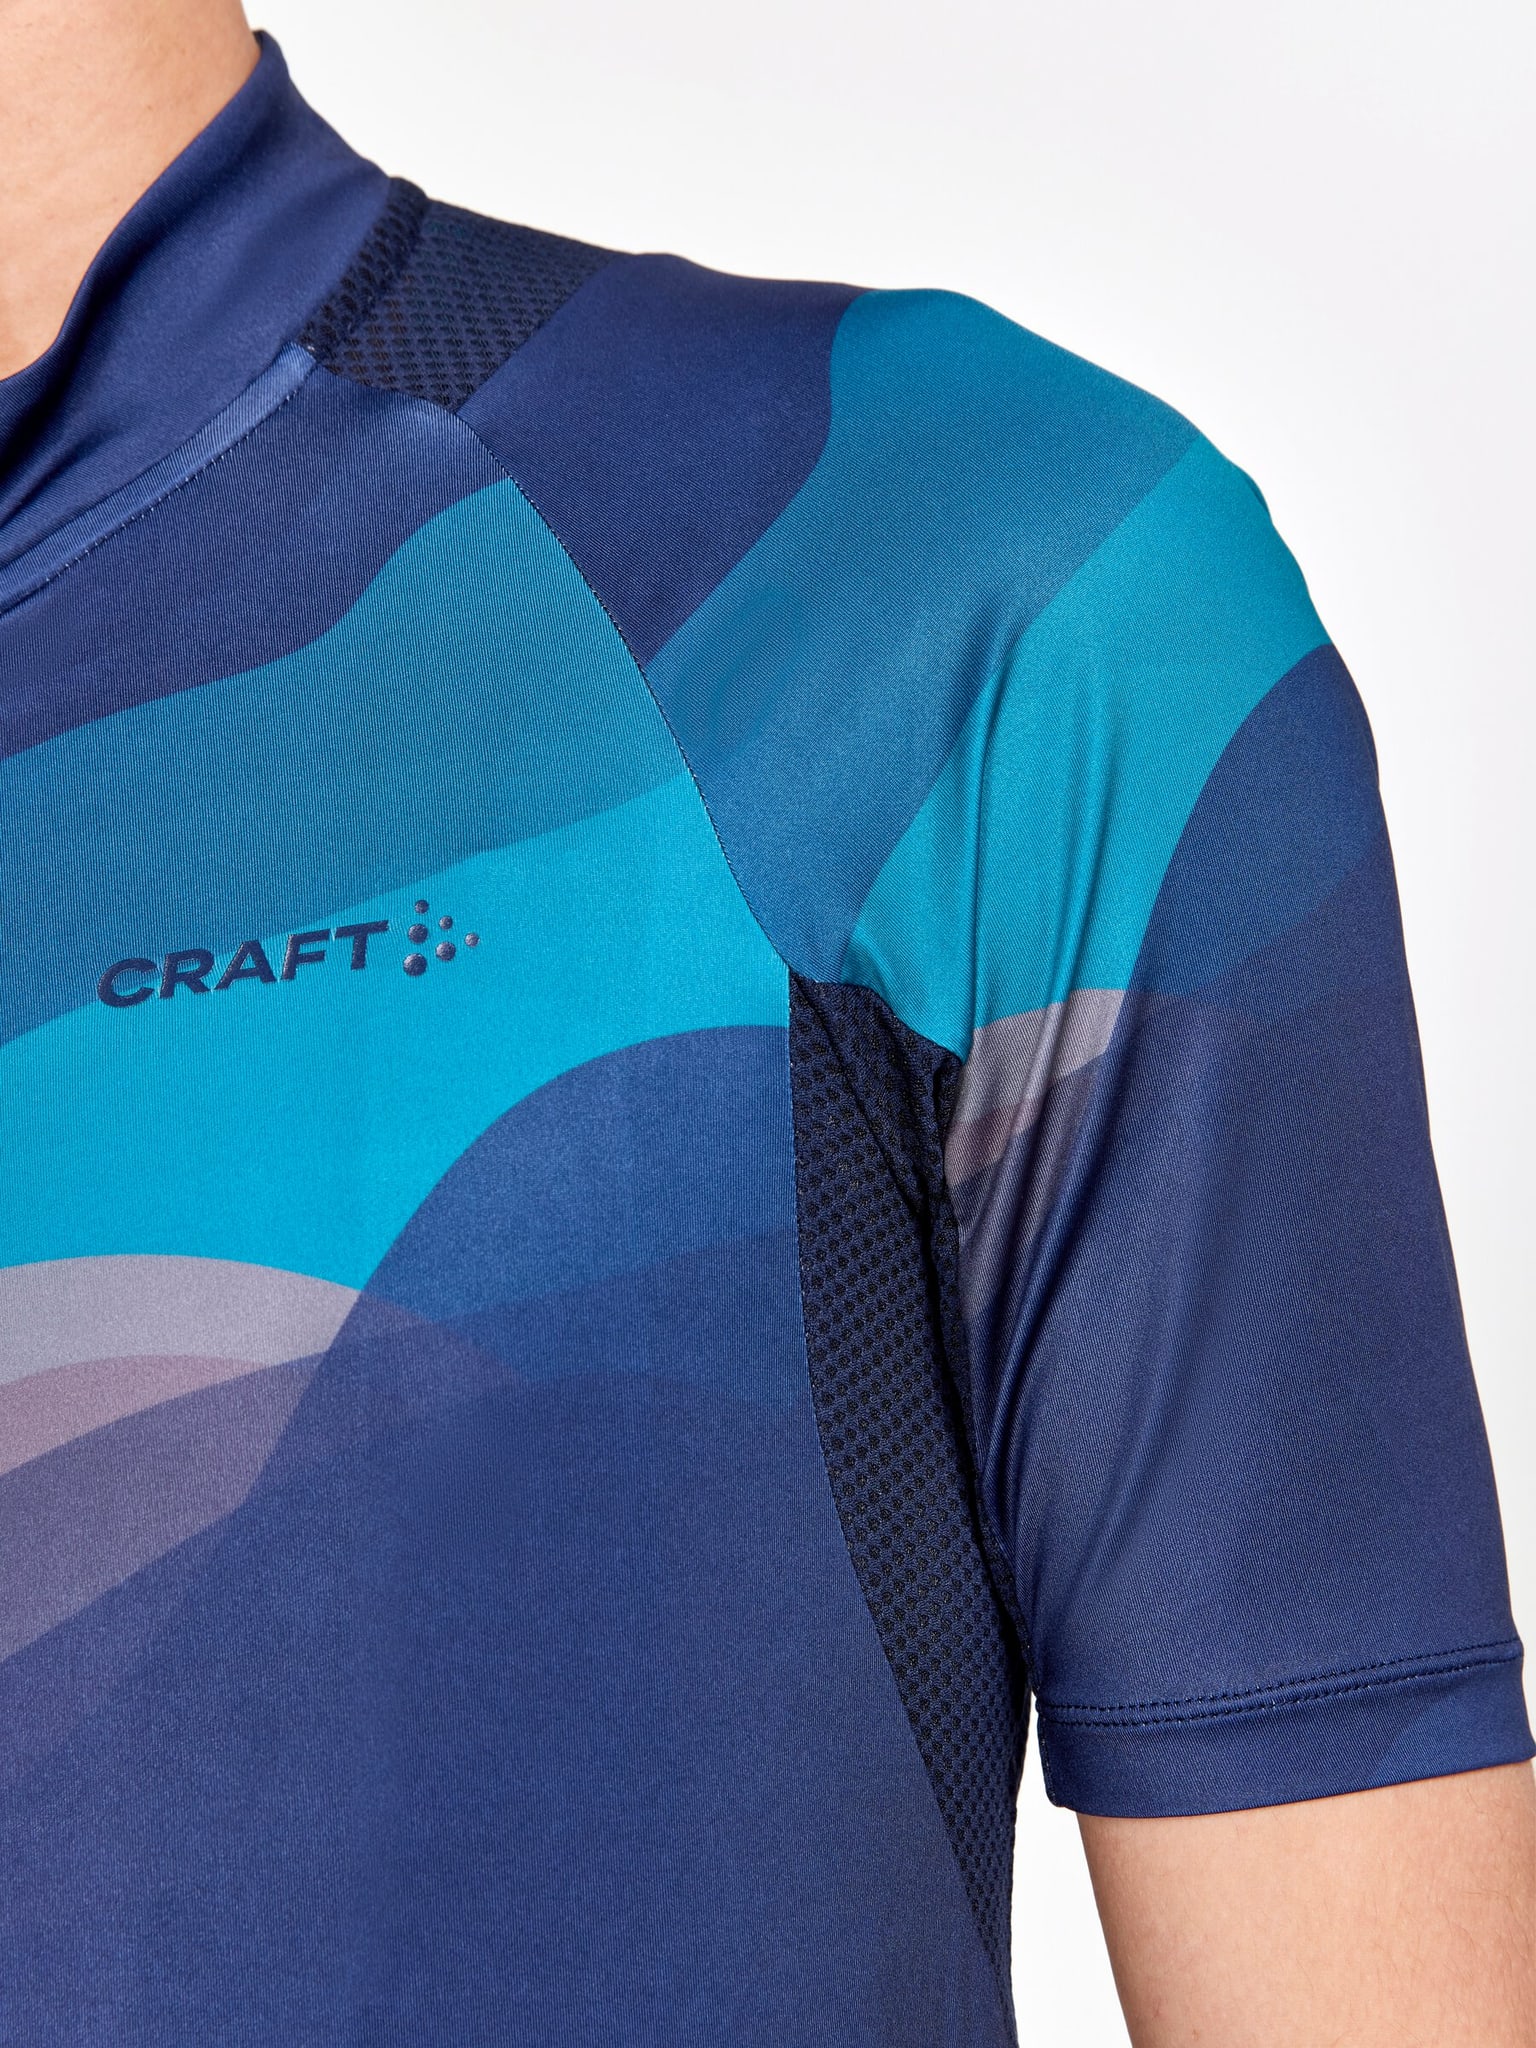 Craft Craft Adv Endur Graphic Jersey Maglietta da bici blu-marino 4